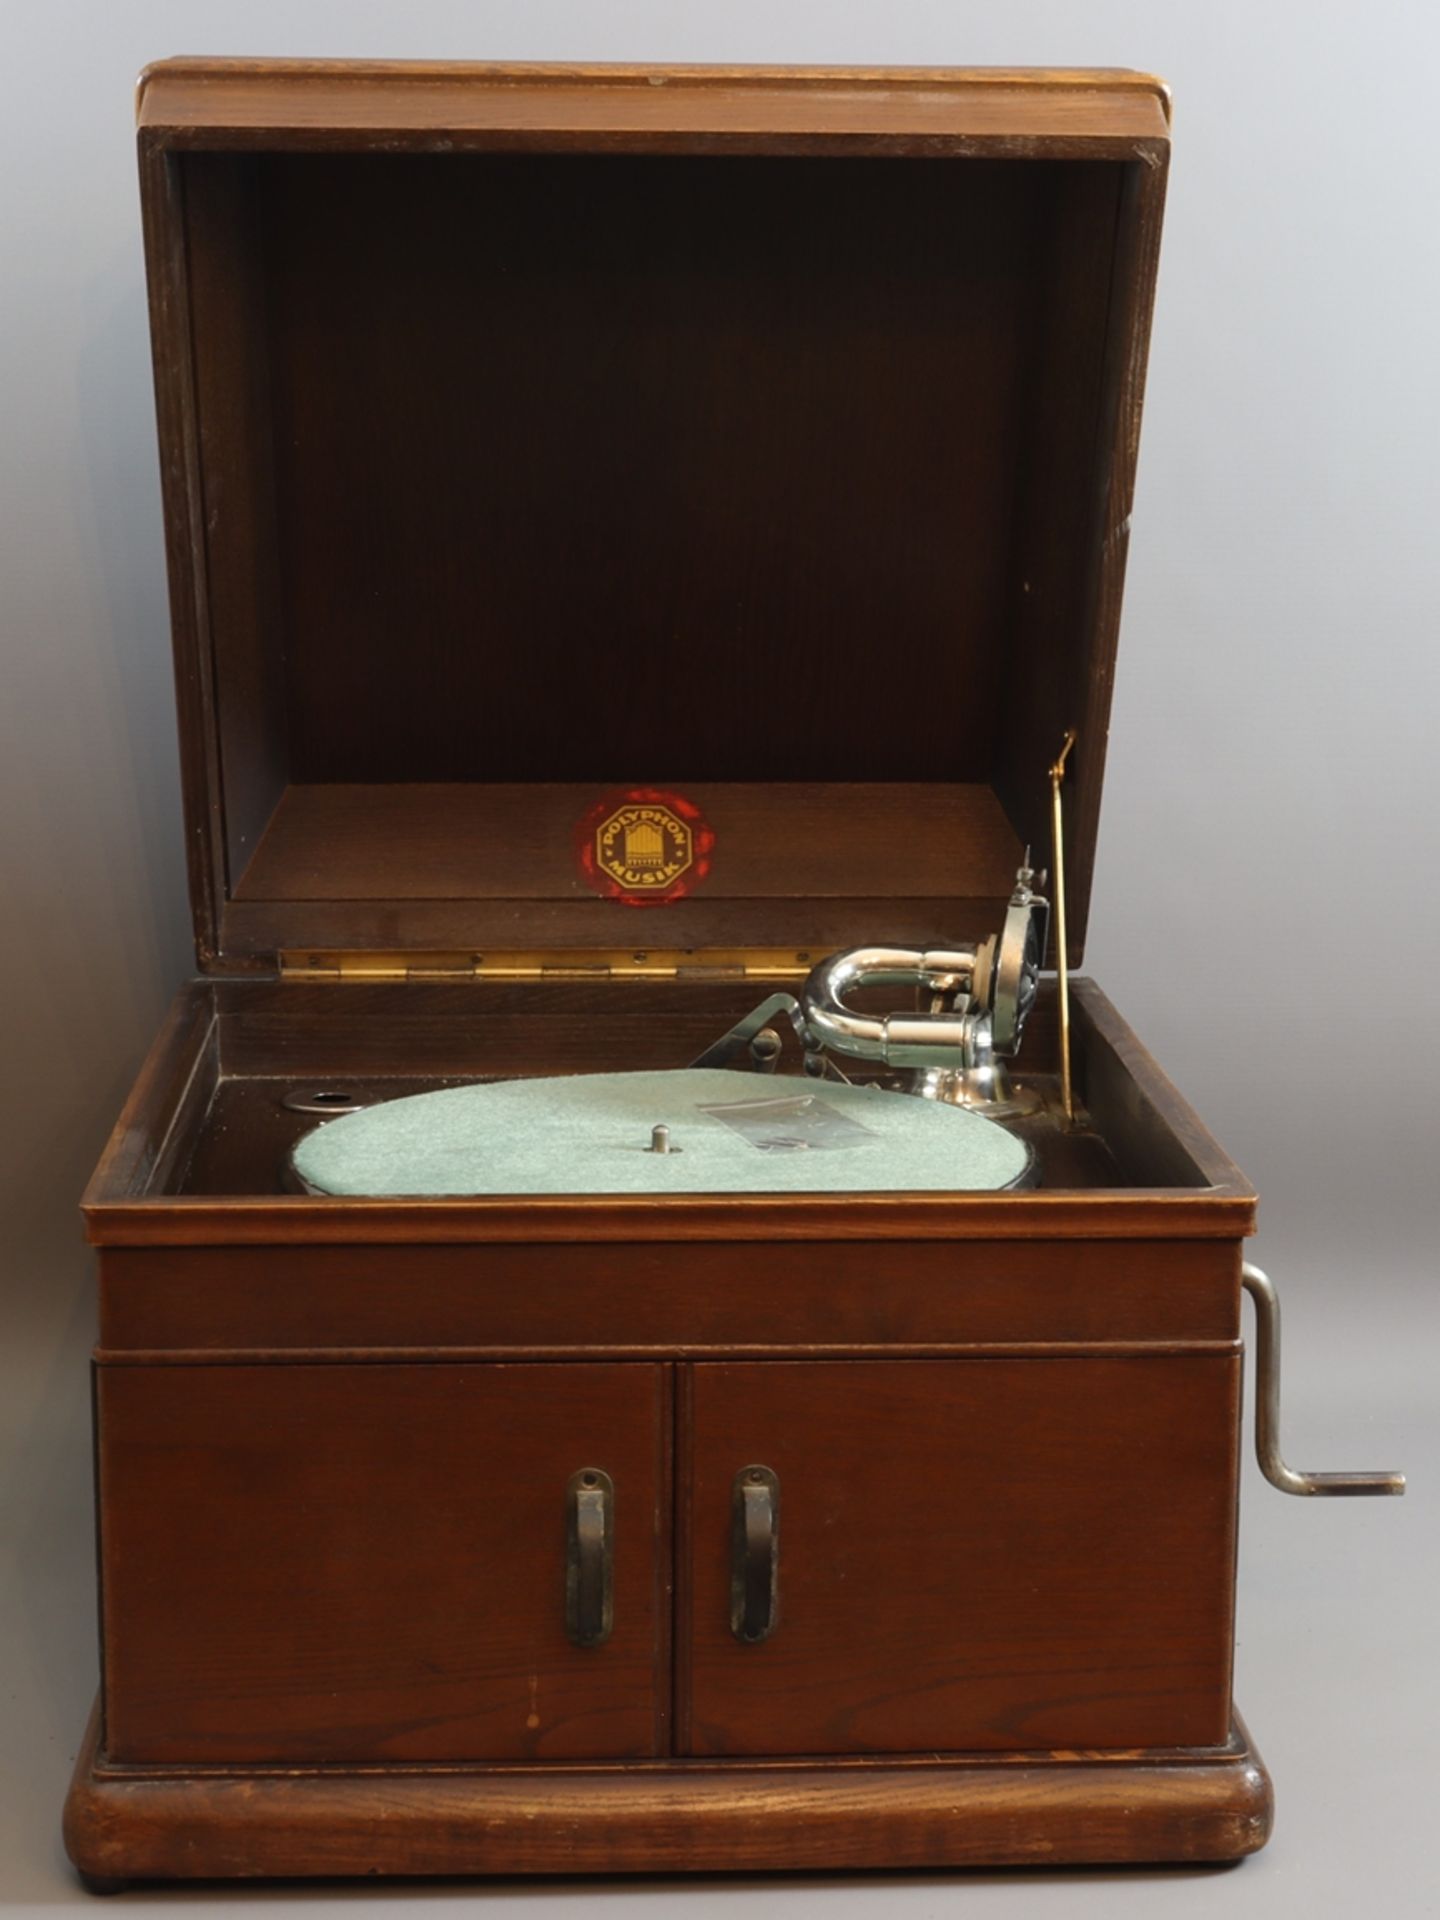 Grammophone make Polyphon circa 1910 - 1930, German - Image 2 of 5